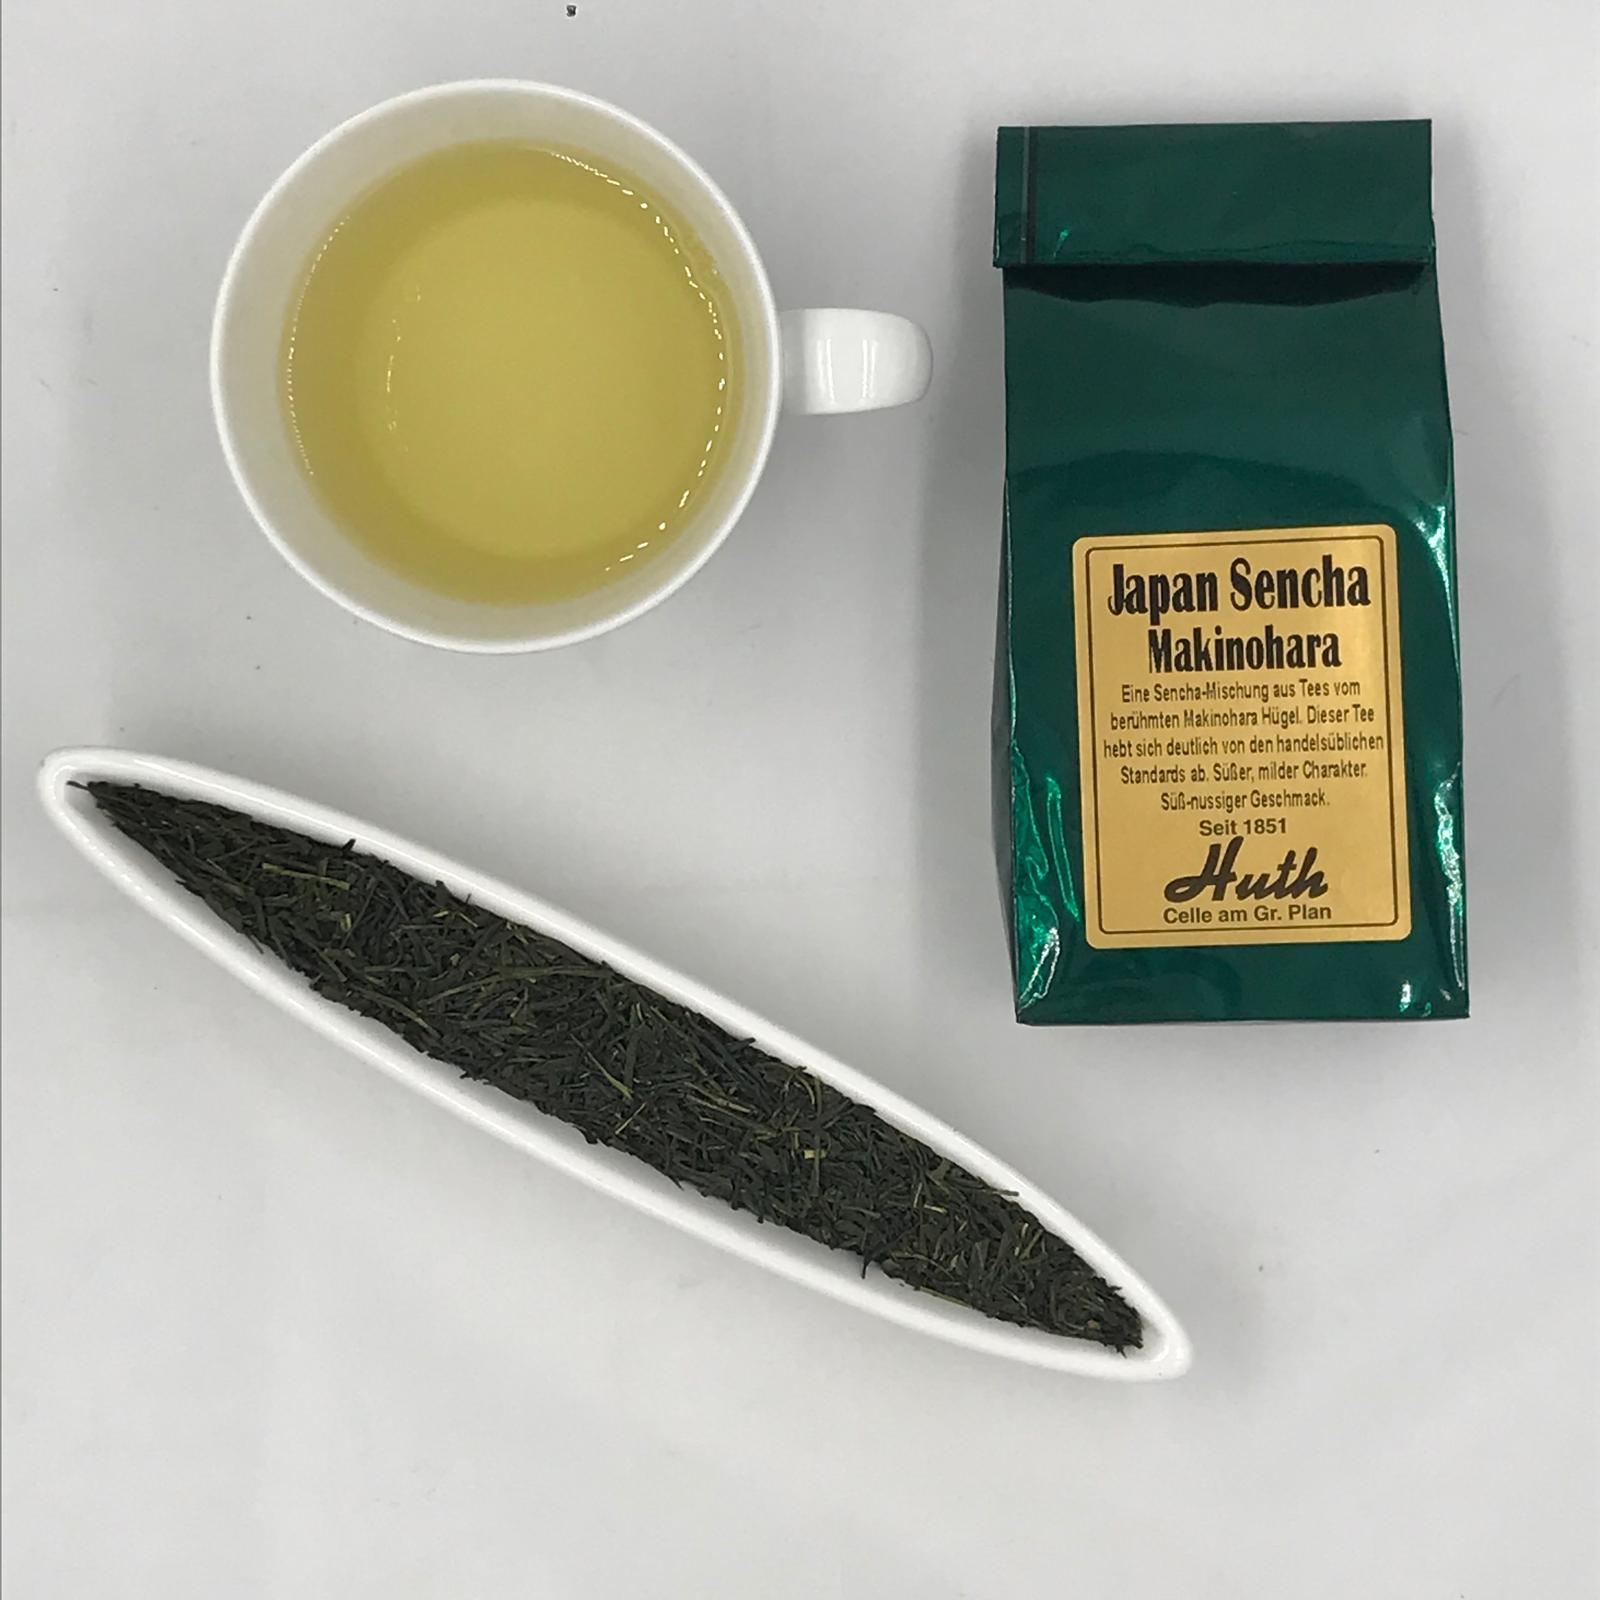 Grüner Tee - Japan Sencha Makinohara